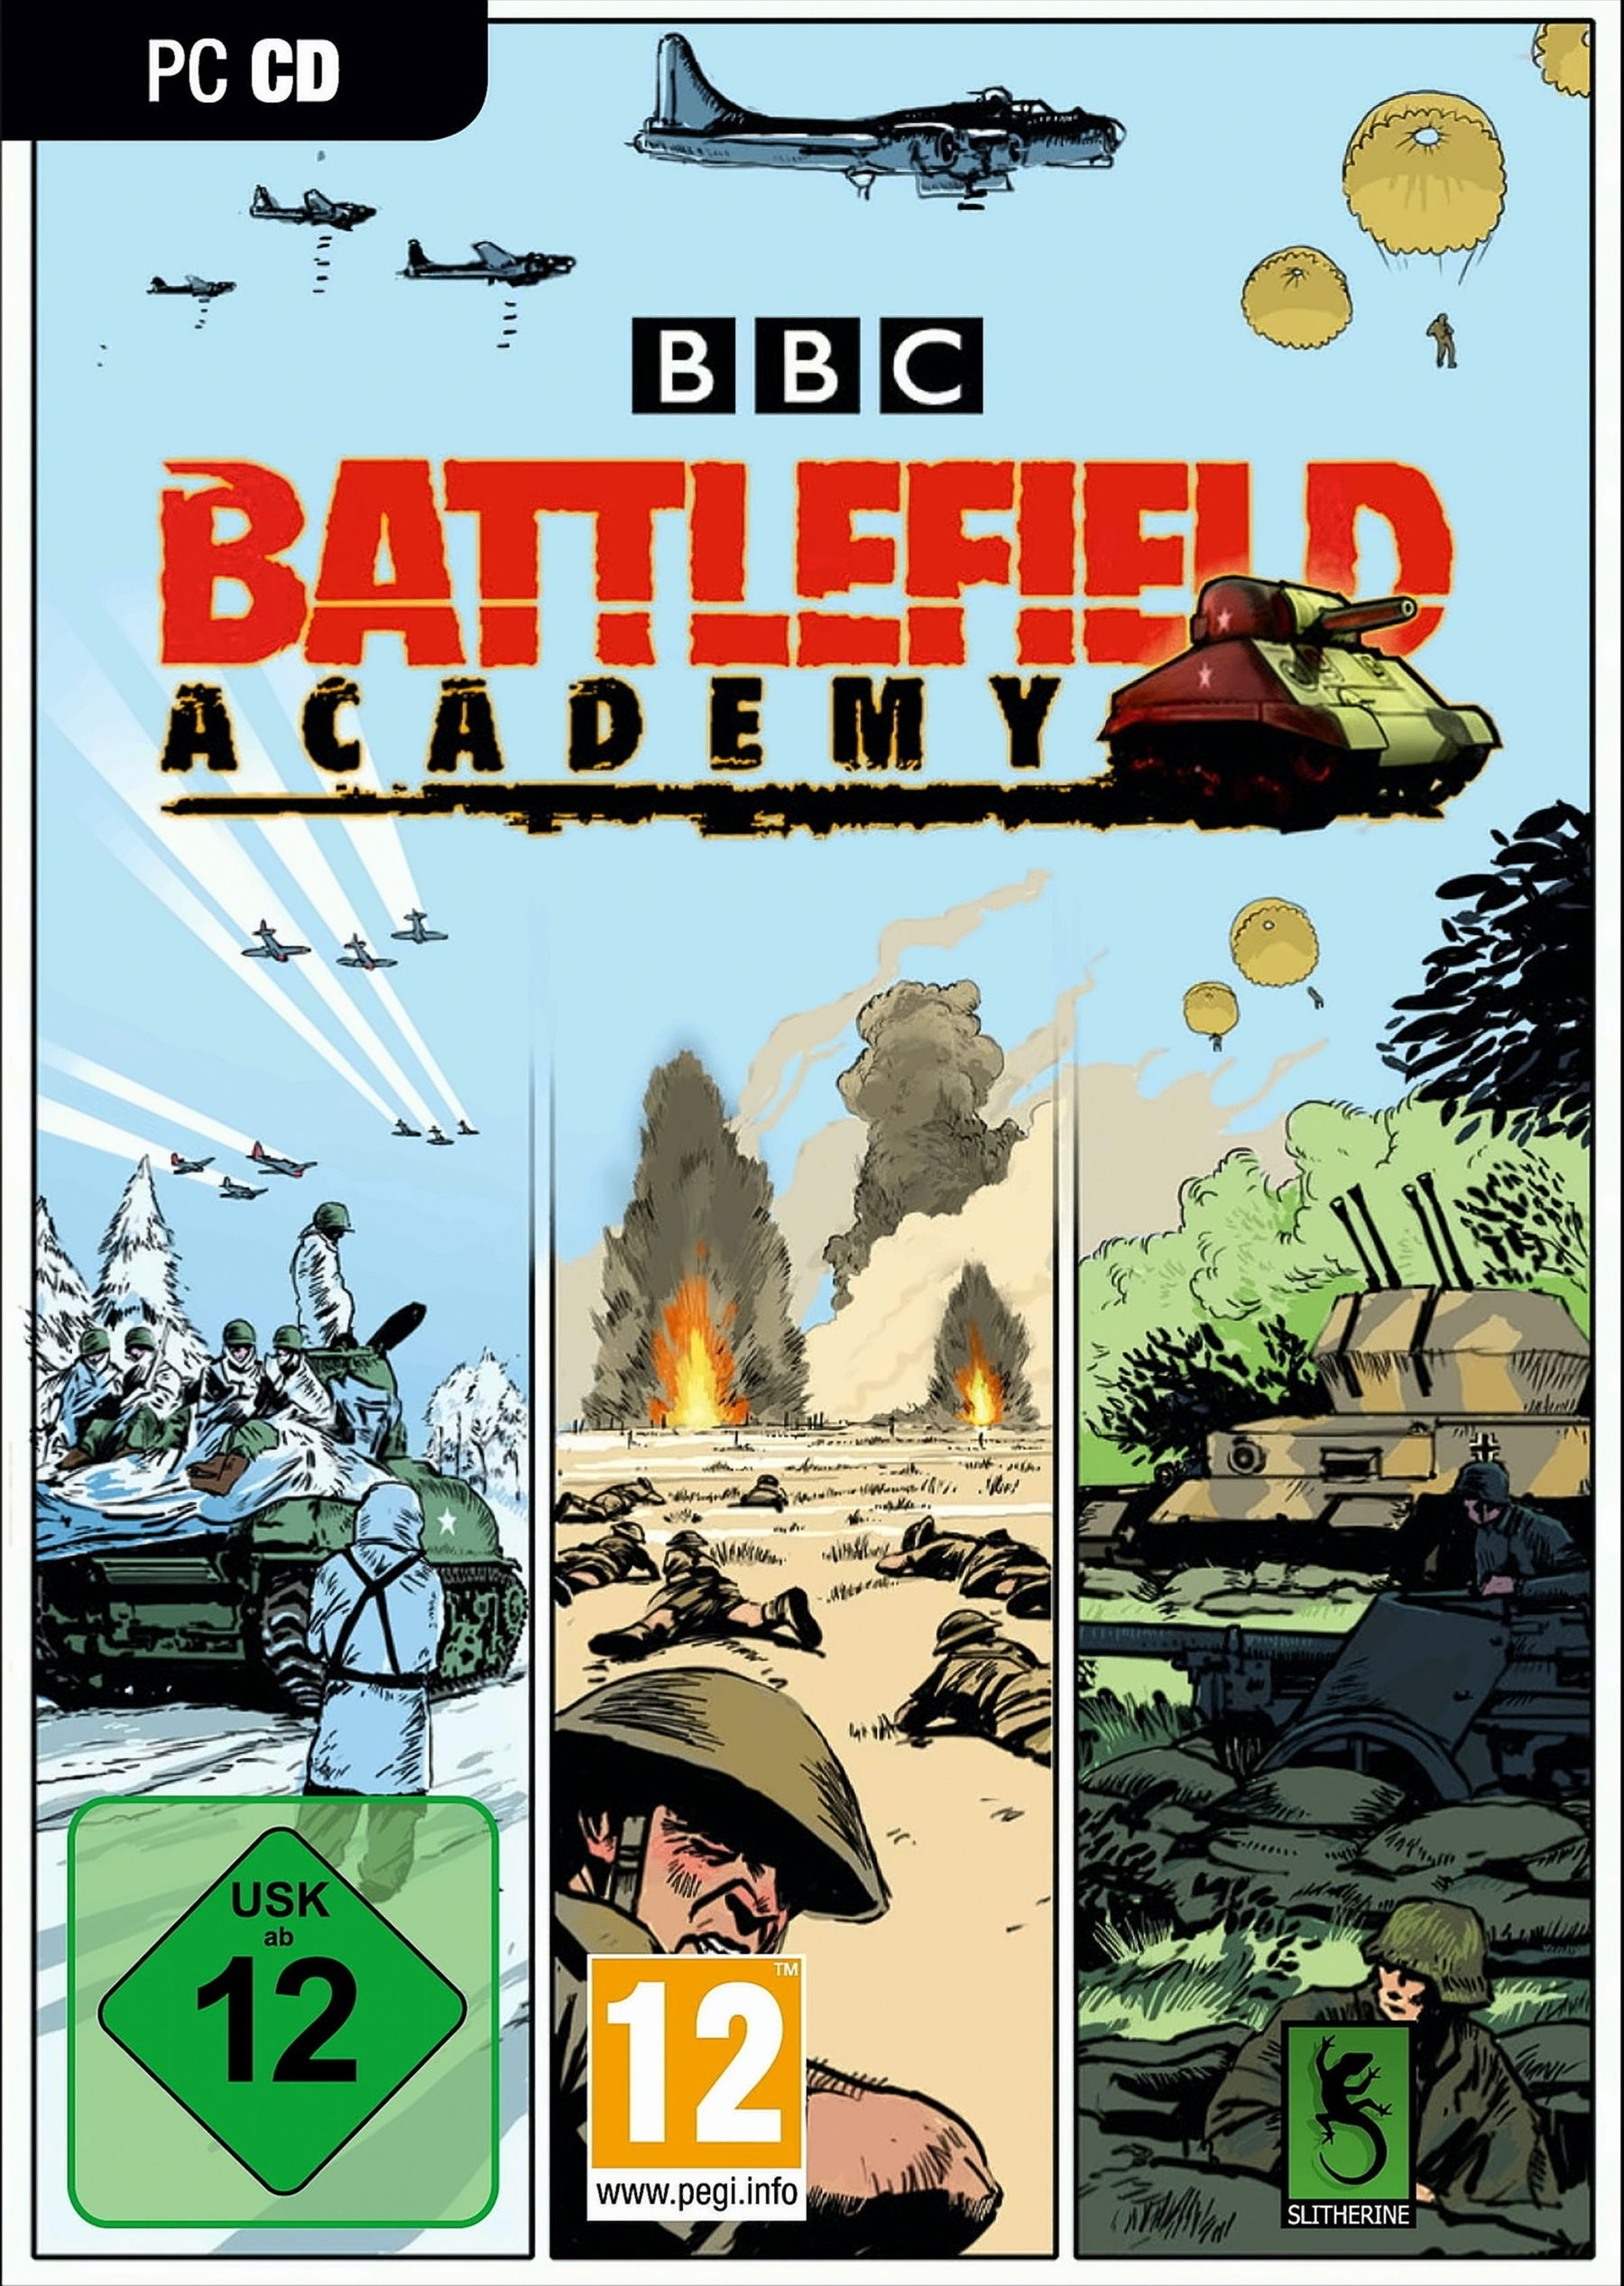 BBC [PC] - Battlefield Academy